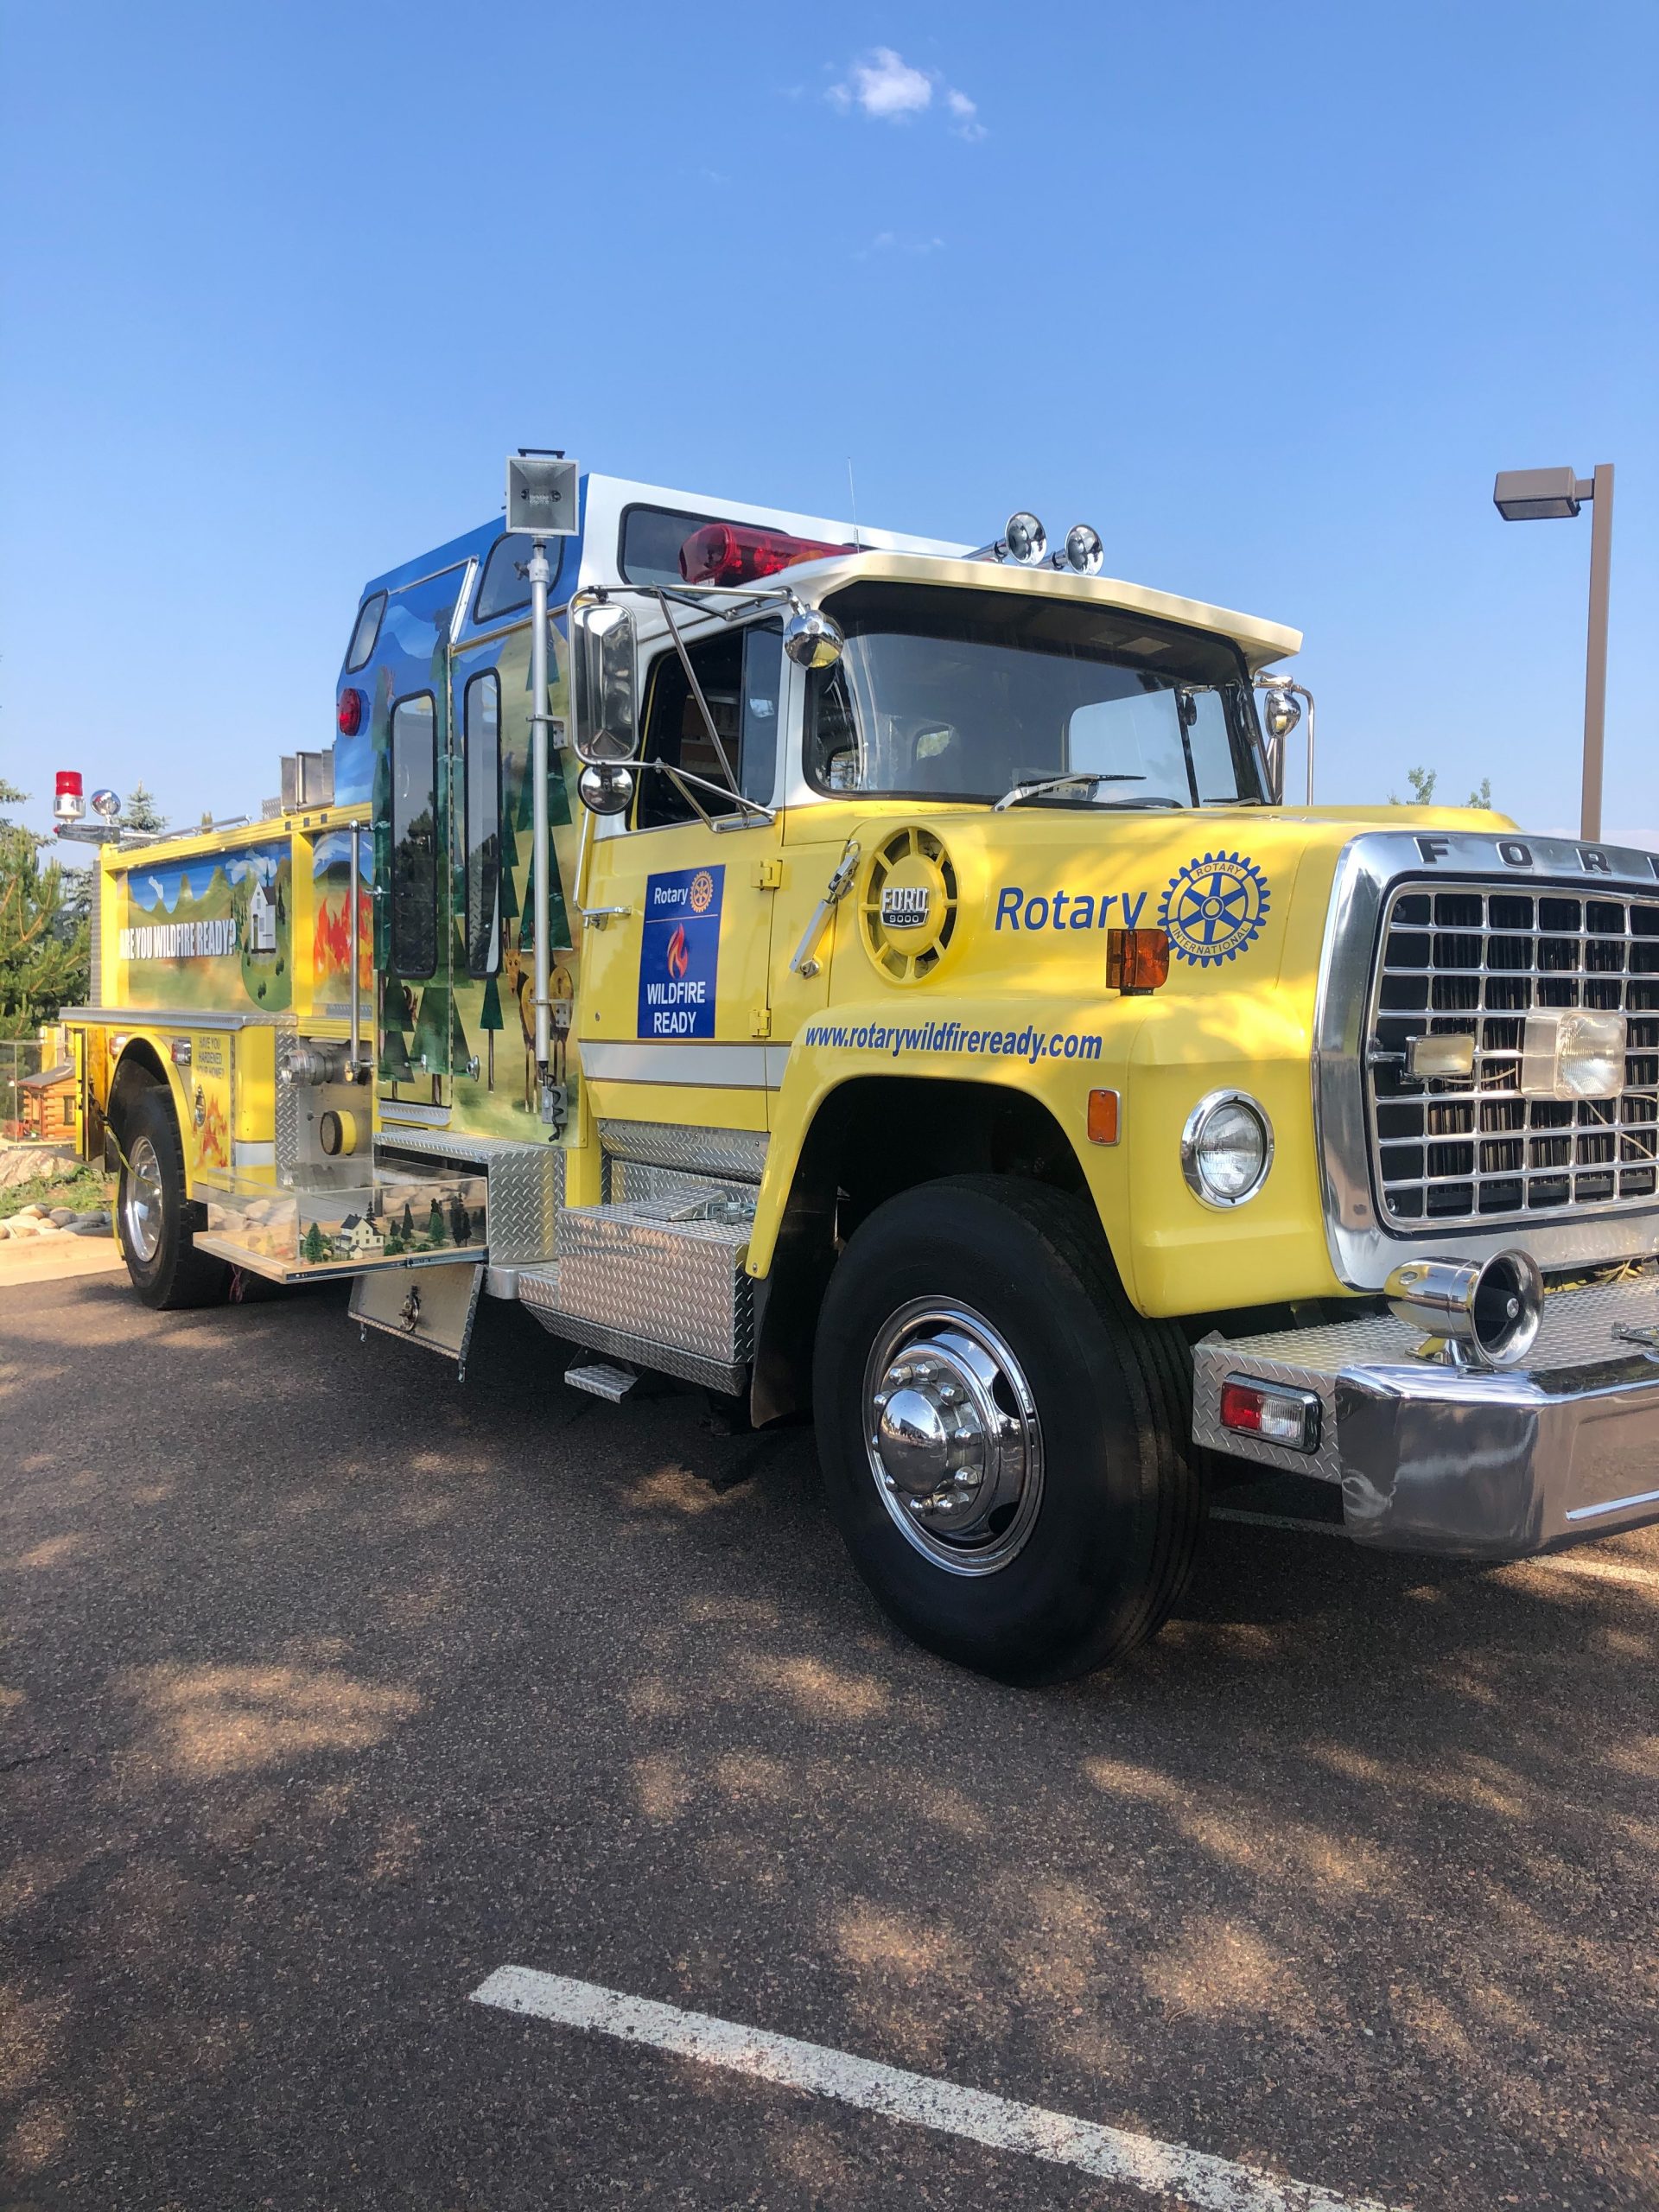 The Evergreen, Colorado Rotary Wildfire Ready firetruck.